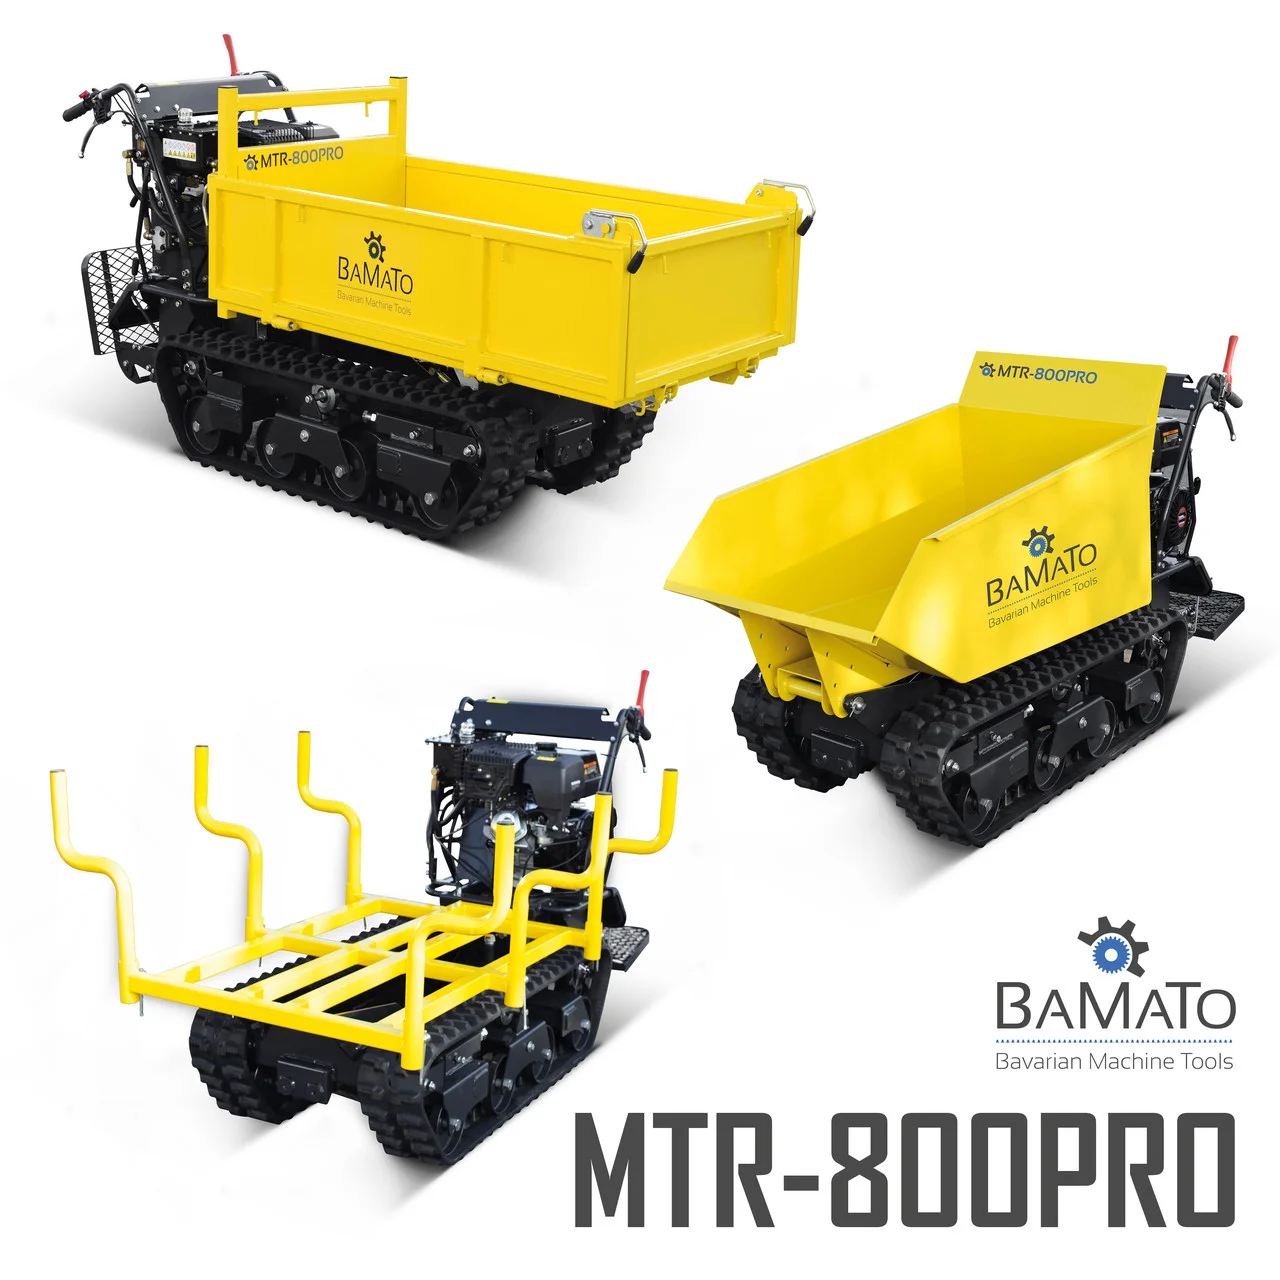  ,   Bamato MTR-800 (MTR-800PRO).